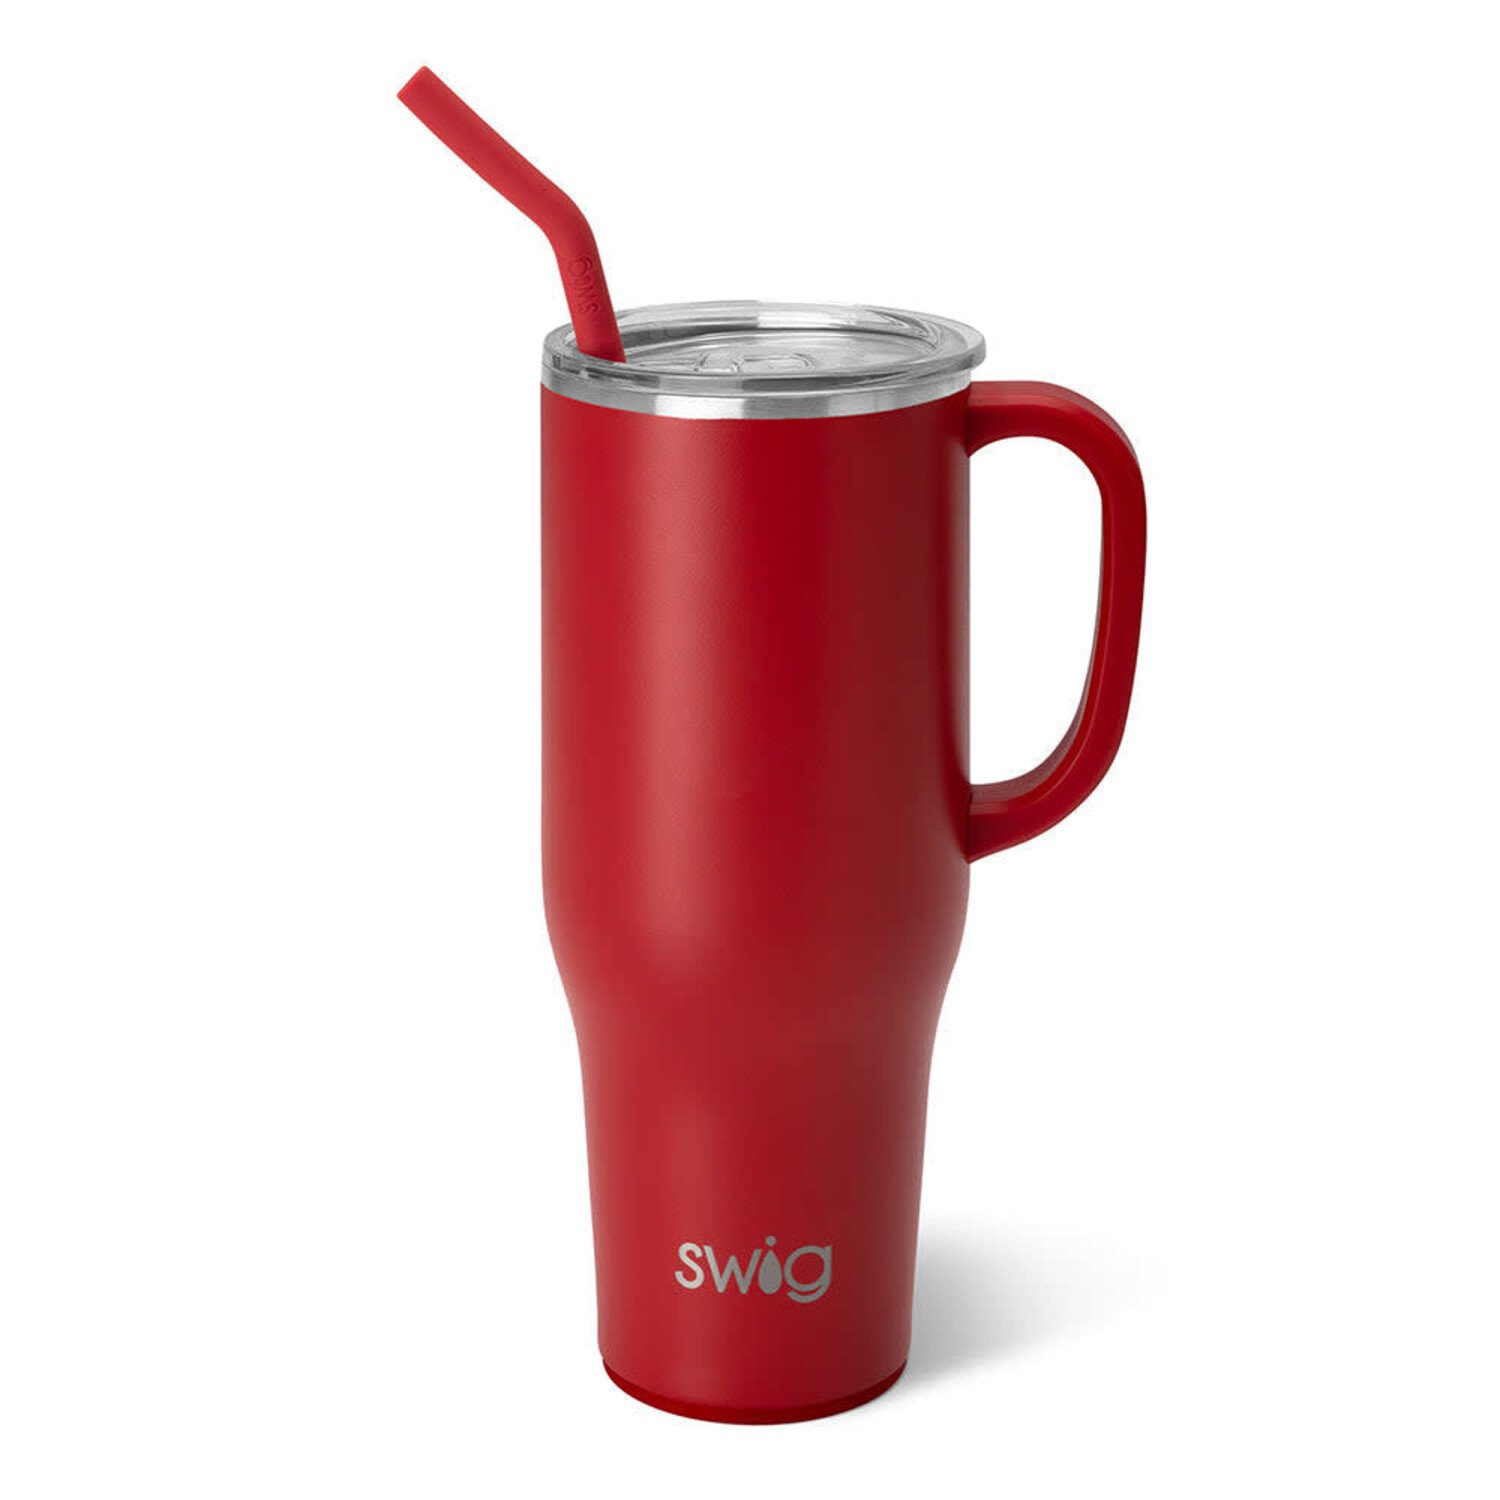  Intrepid Vacuum Mug with Straw - 40 oz. 165767